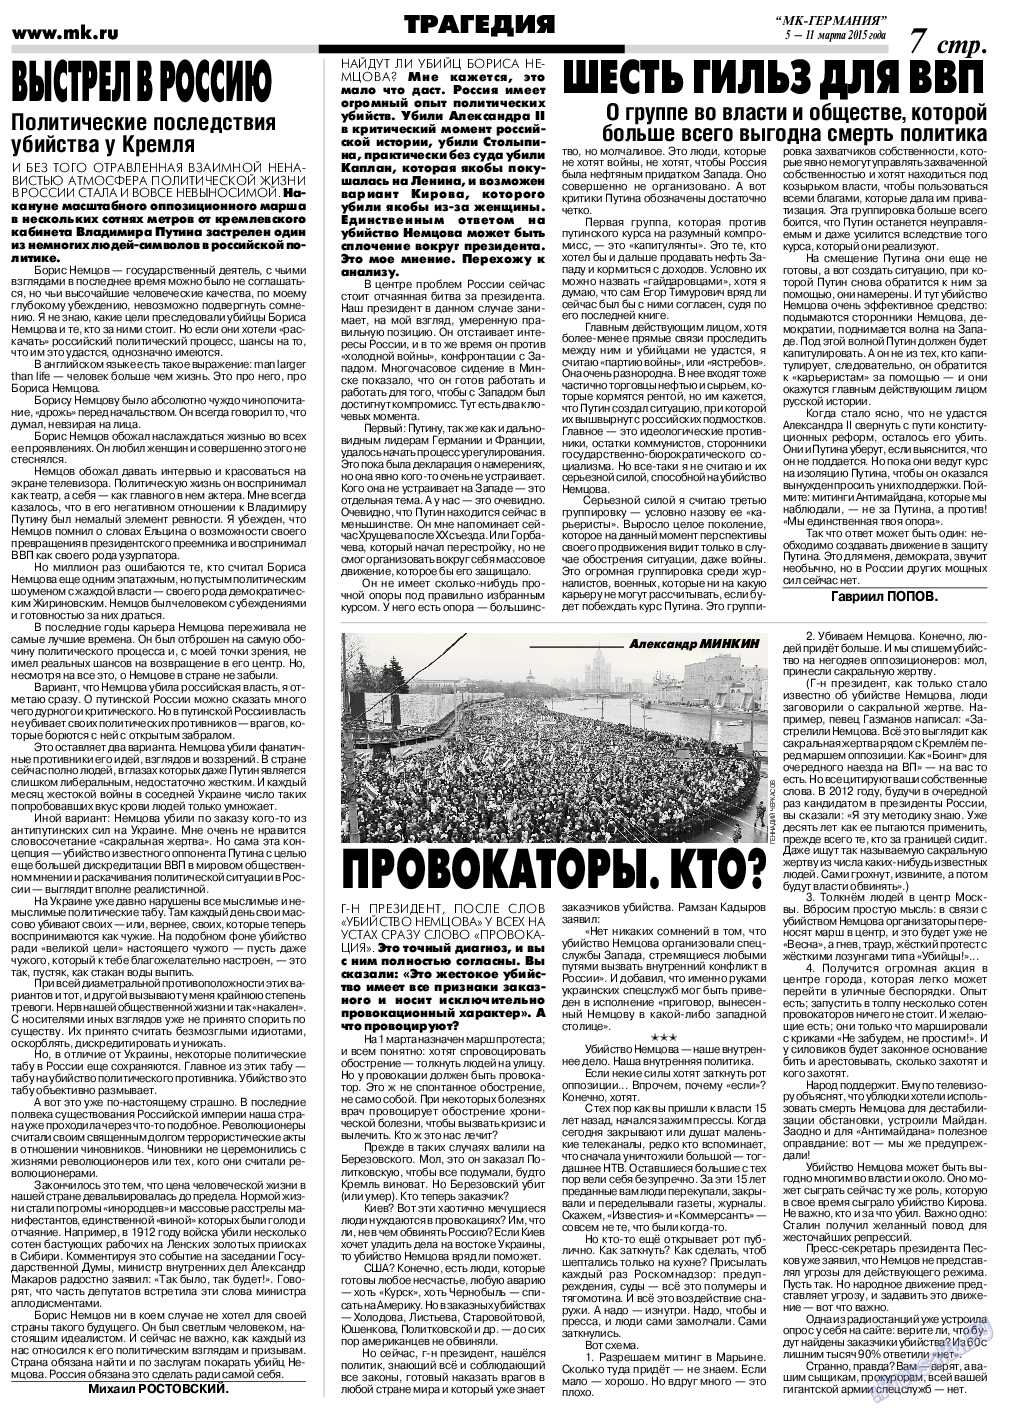 МК-Германия, газета. 2015 №10 стр.7